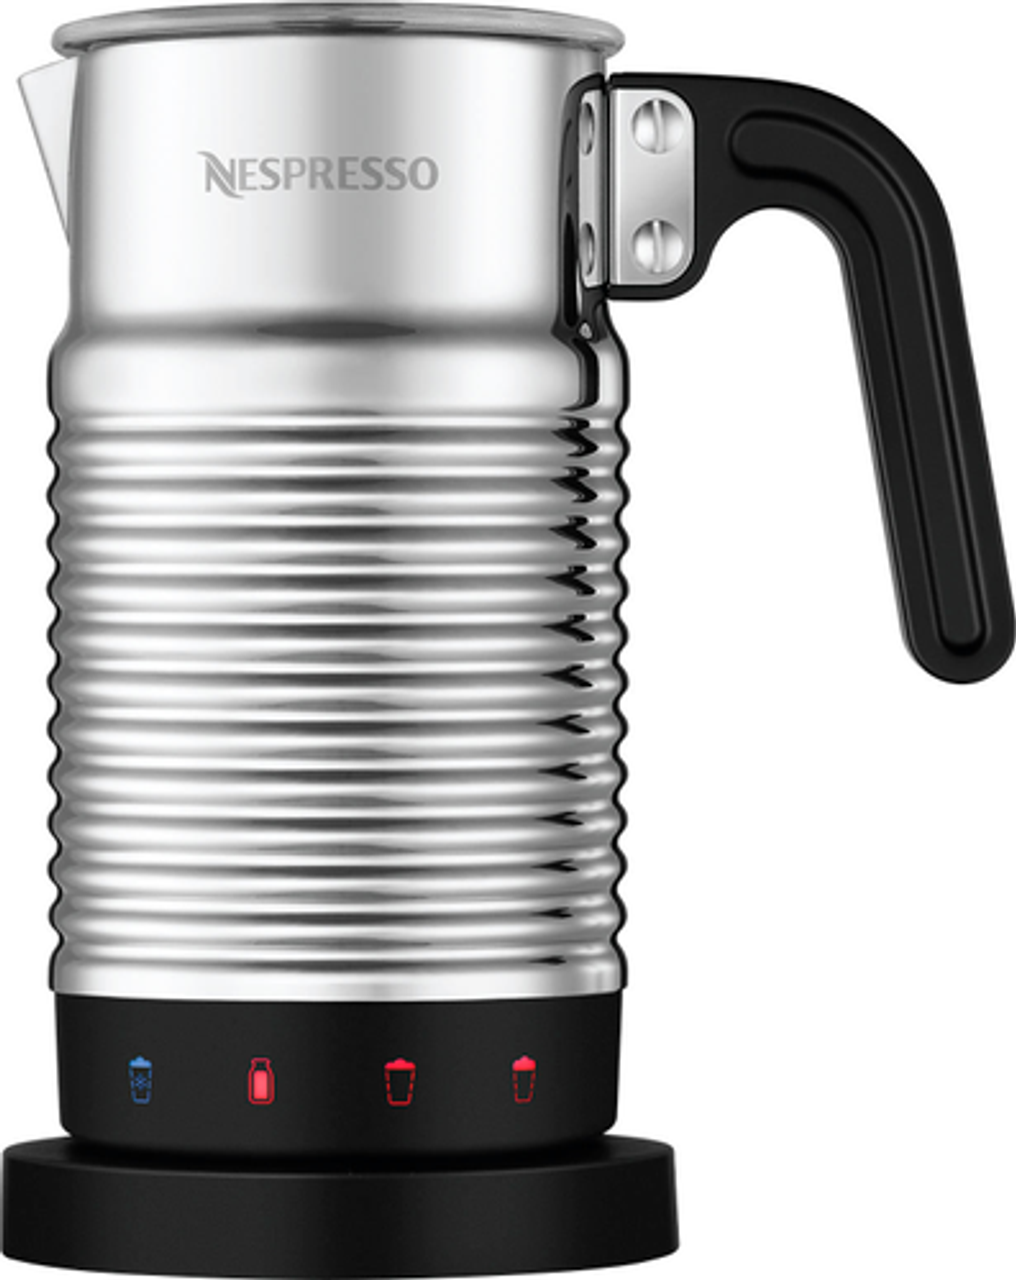 Nespresso Aeroccino 4 Milk Frother - Stainless Steel